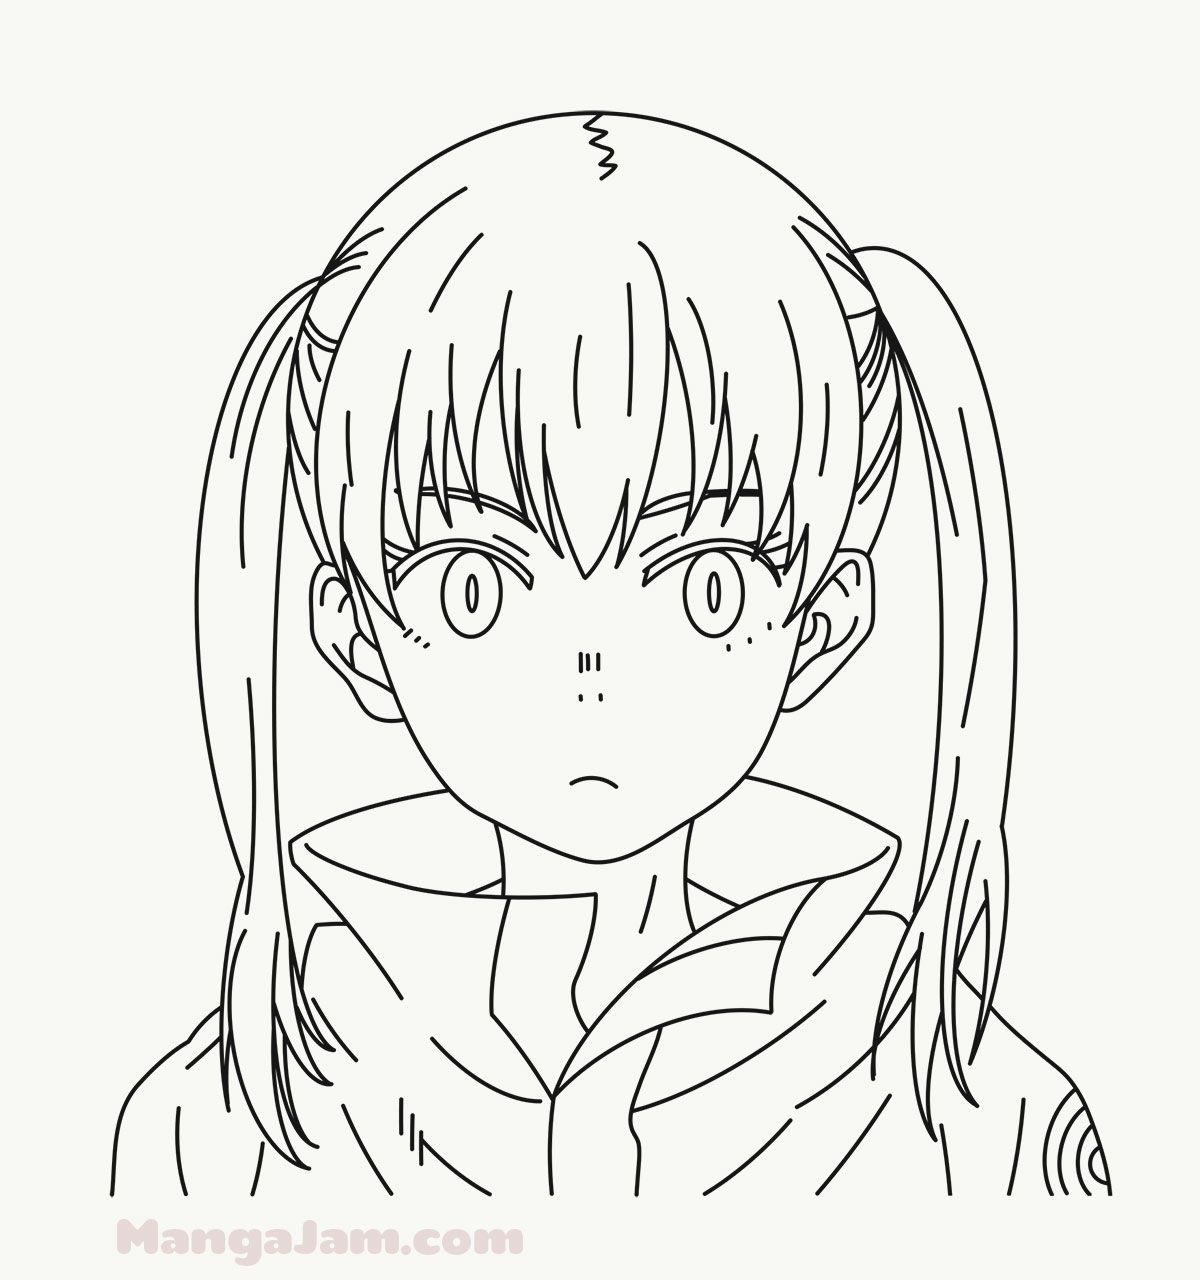 How to Draw Tamaki Kotatsu from Fire Force - MANGAJAM.com | Drawings, Draw,  Anime drawings tutorials